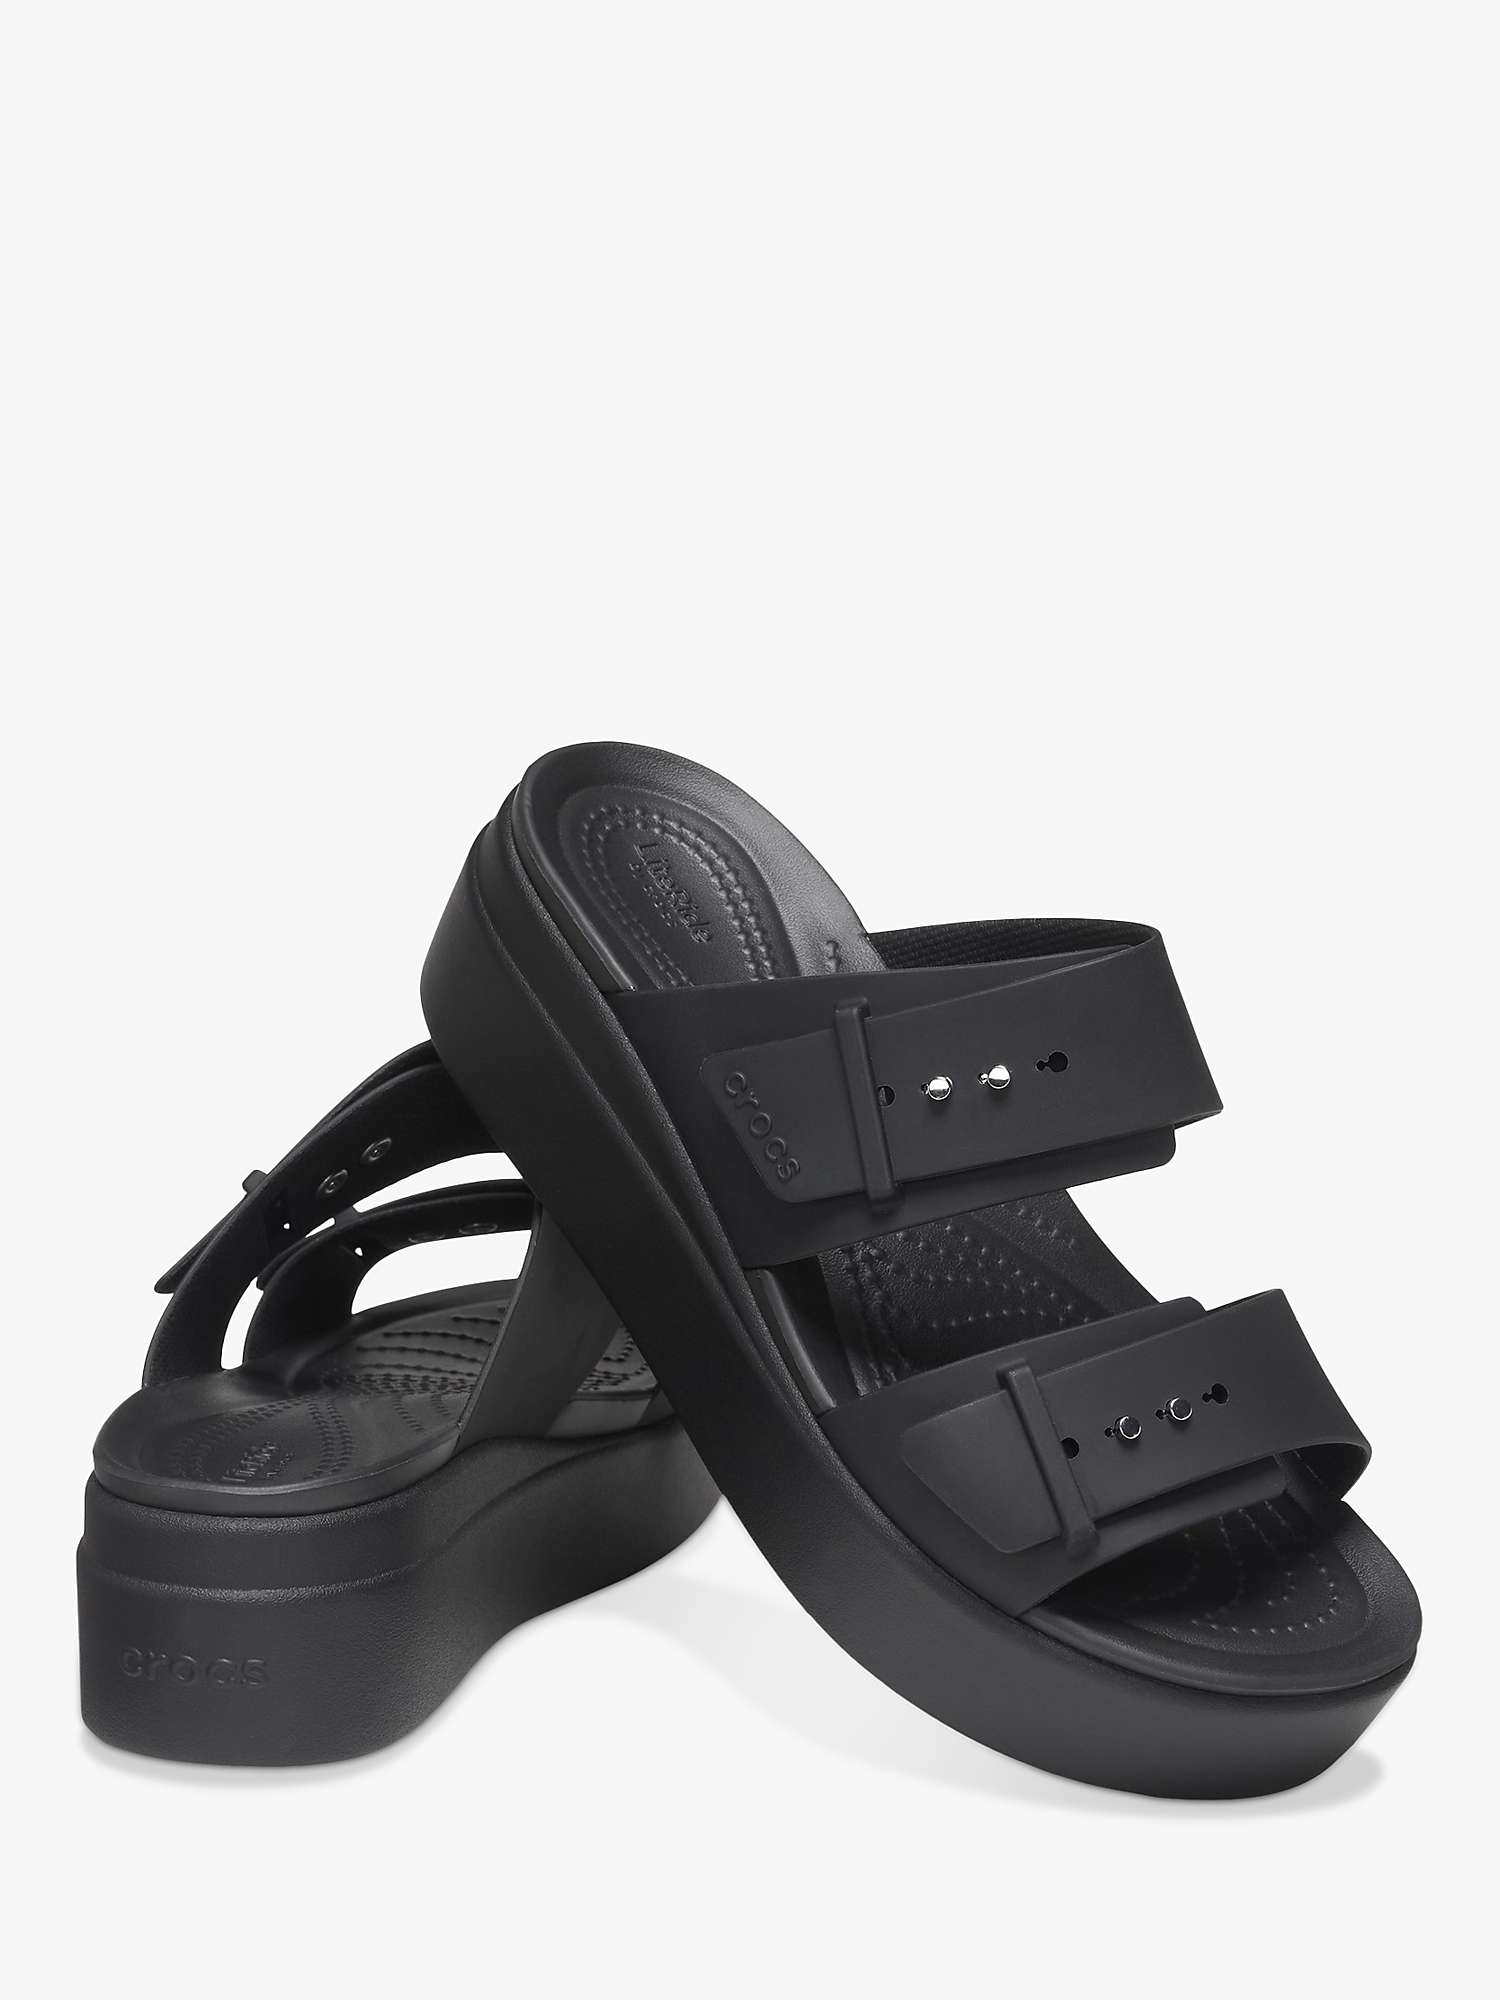 Buy Crocs Brooklyn Sandals, Black Online at johnlewis.com